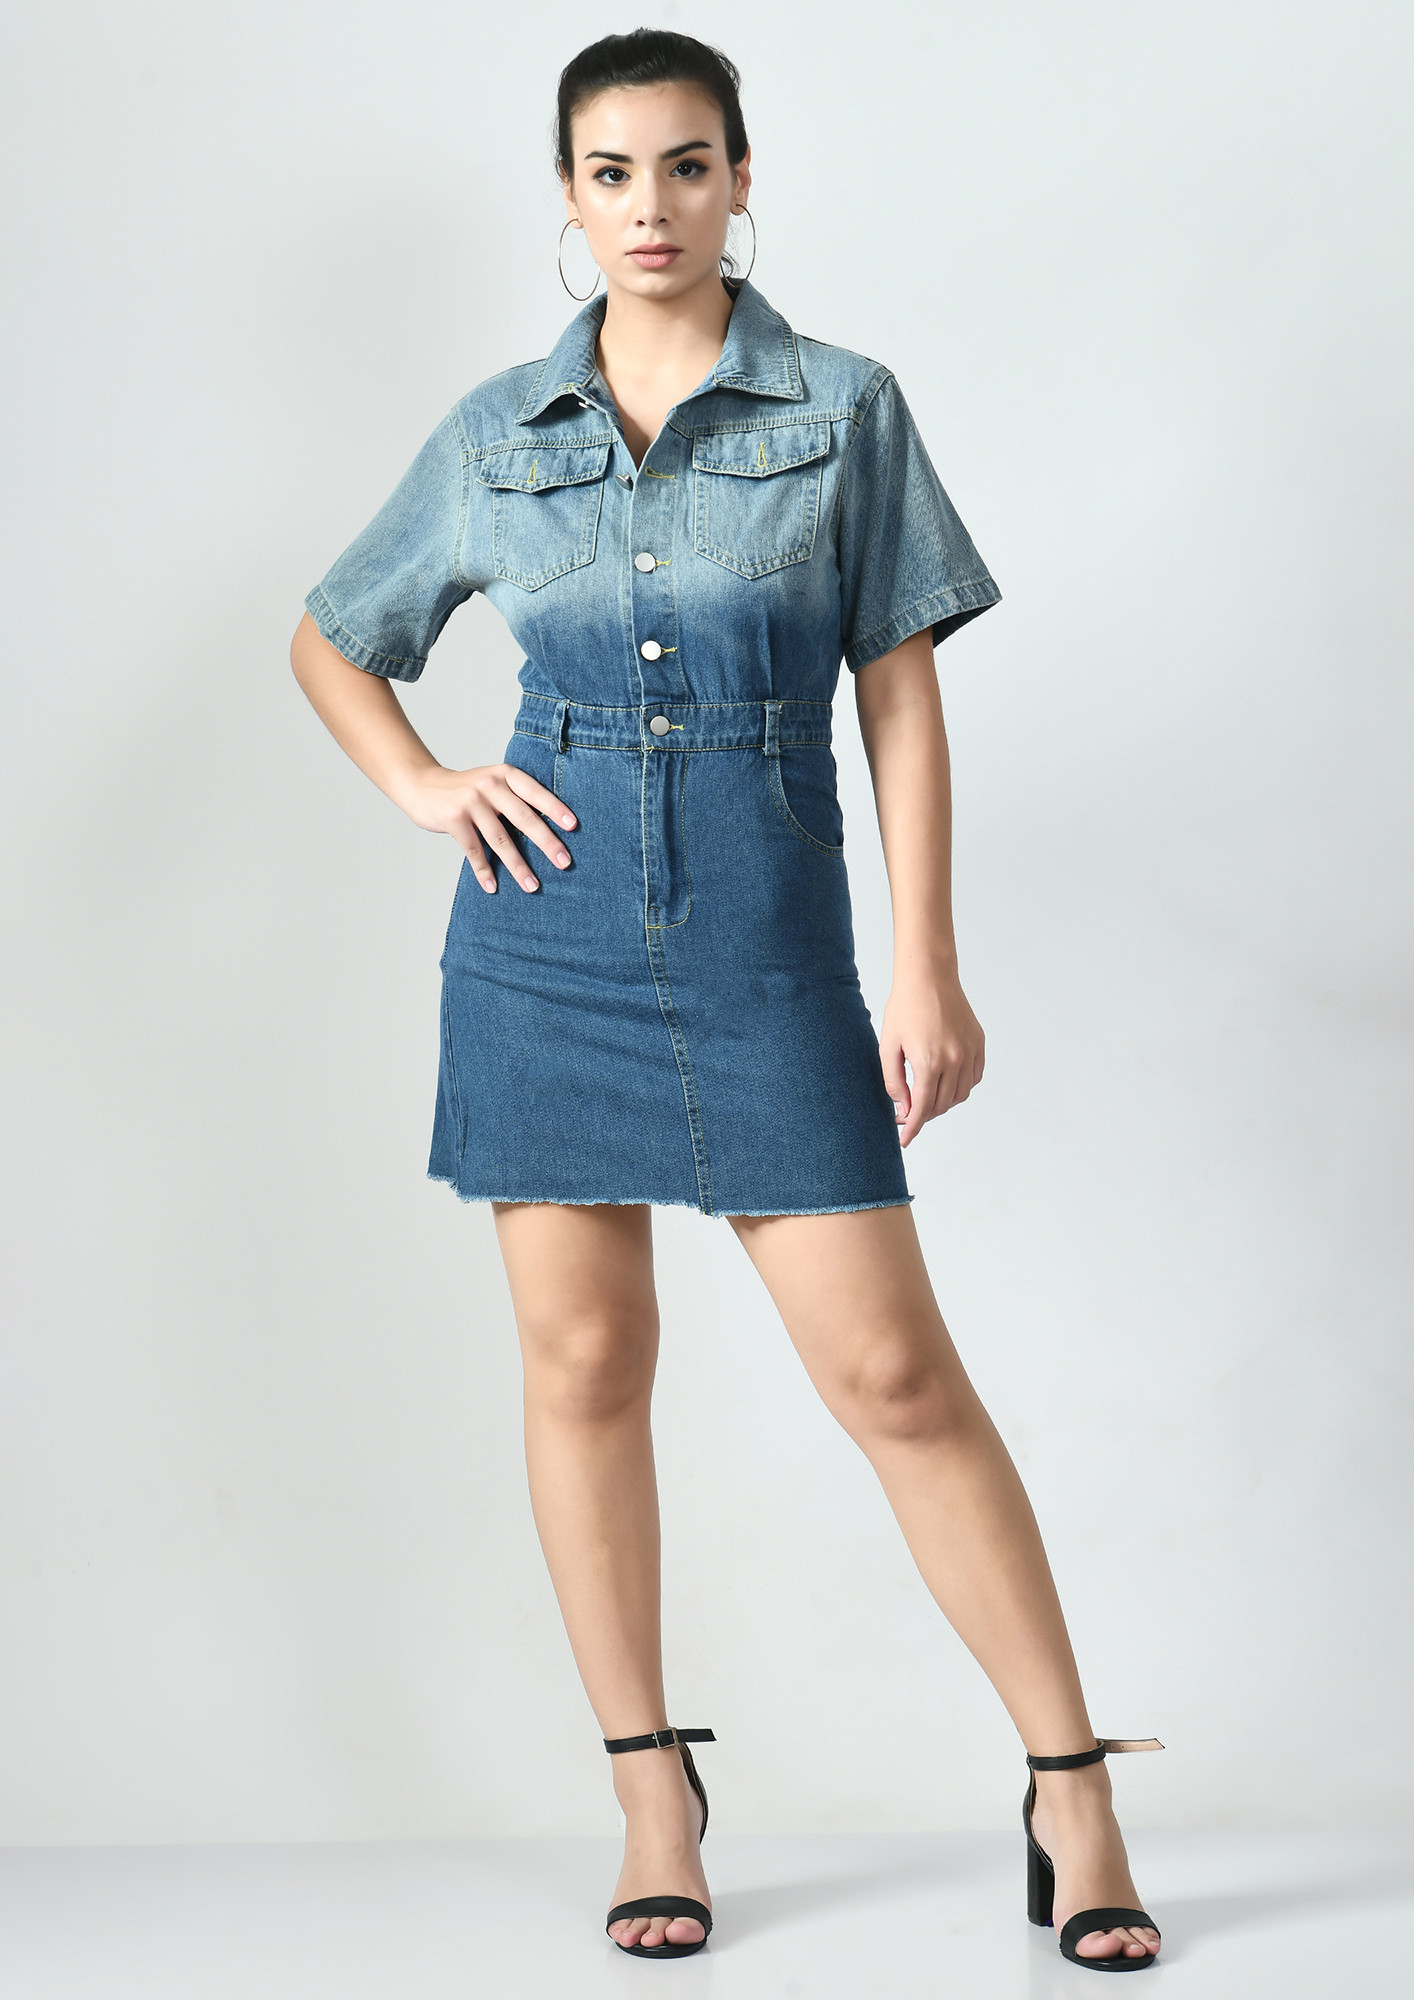 Buy Lavany ❤️ Womens Casual Dress,Women Ladies Summer Round Neck Ruffled  Skirt Stretch Denim Dress Mini Dess at Amazon.in